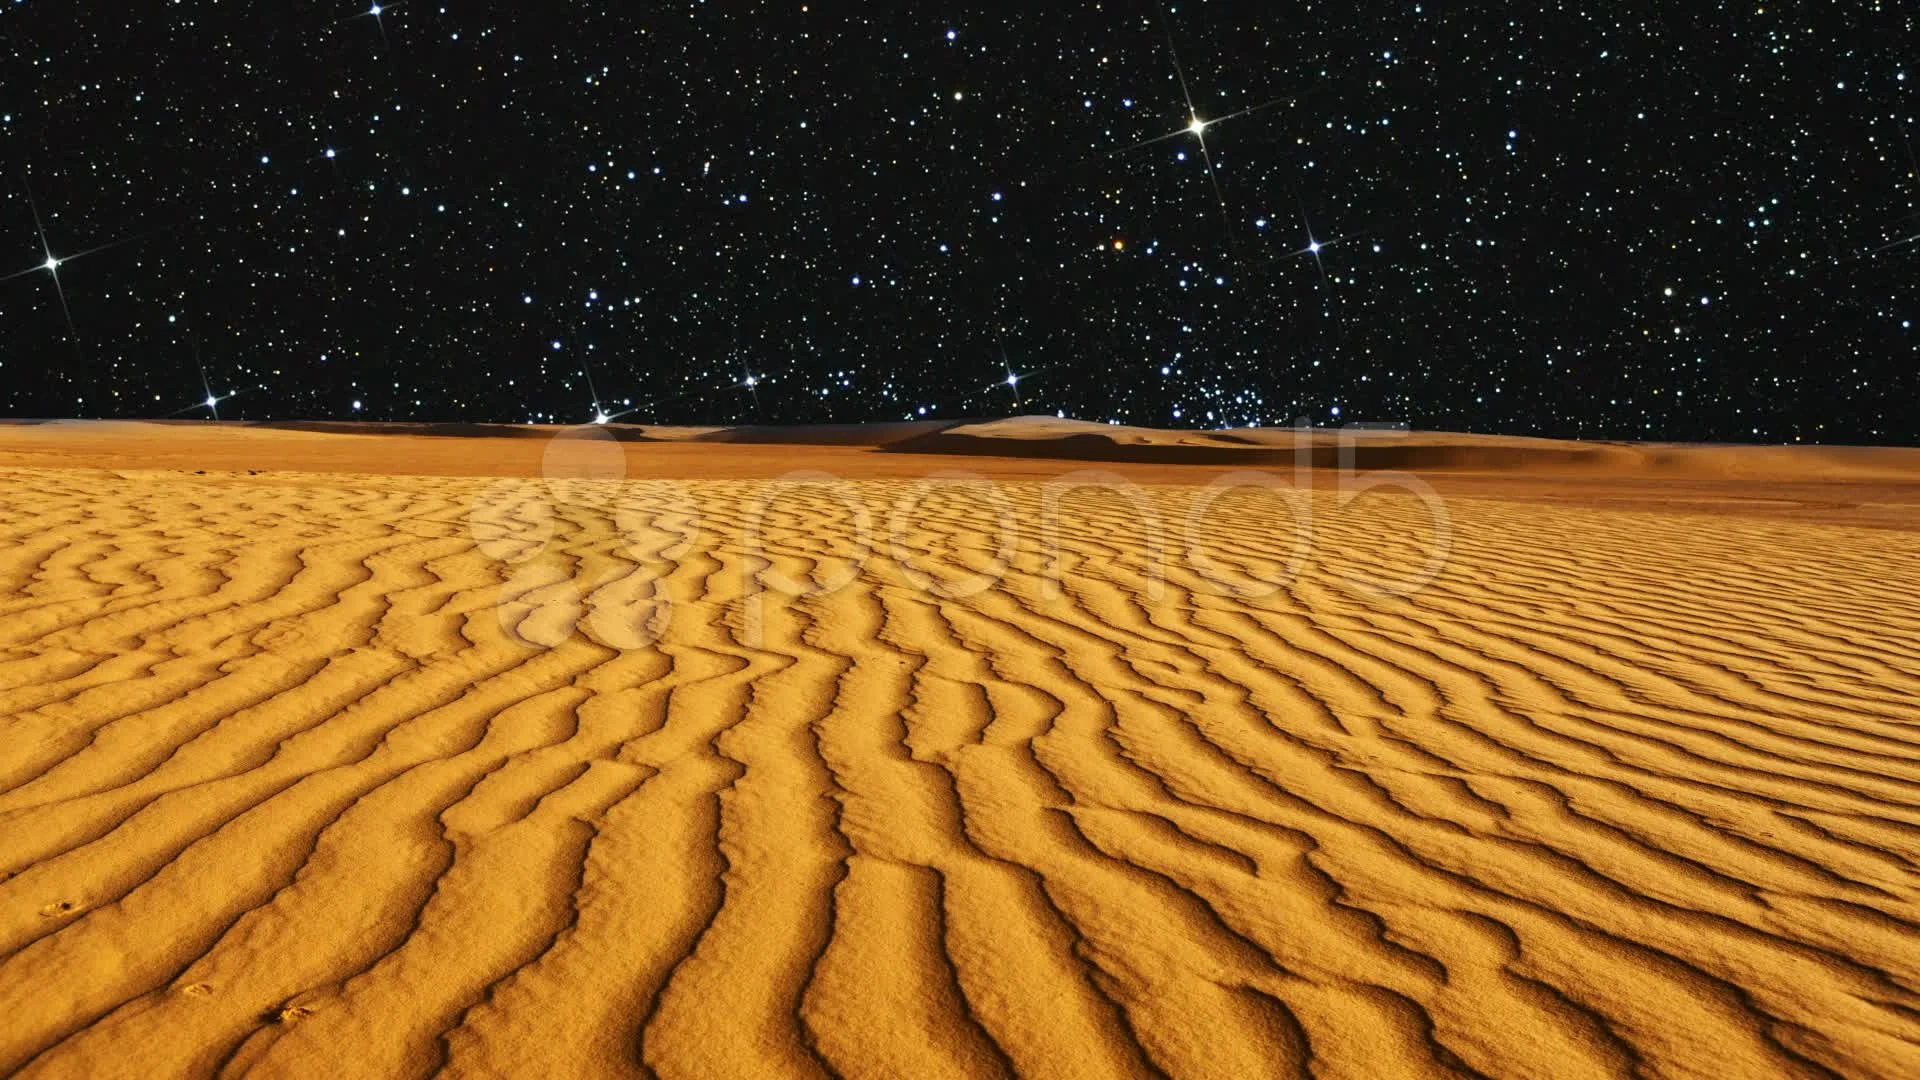 1800 Sahara Desert Night Stock Photos Pictures  RoyaltyFree Images   iStock